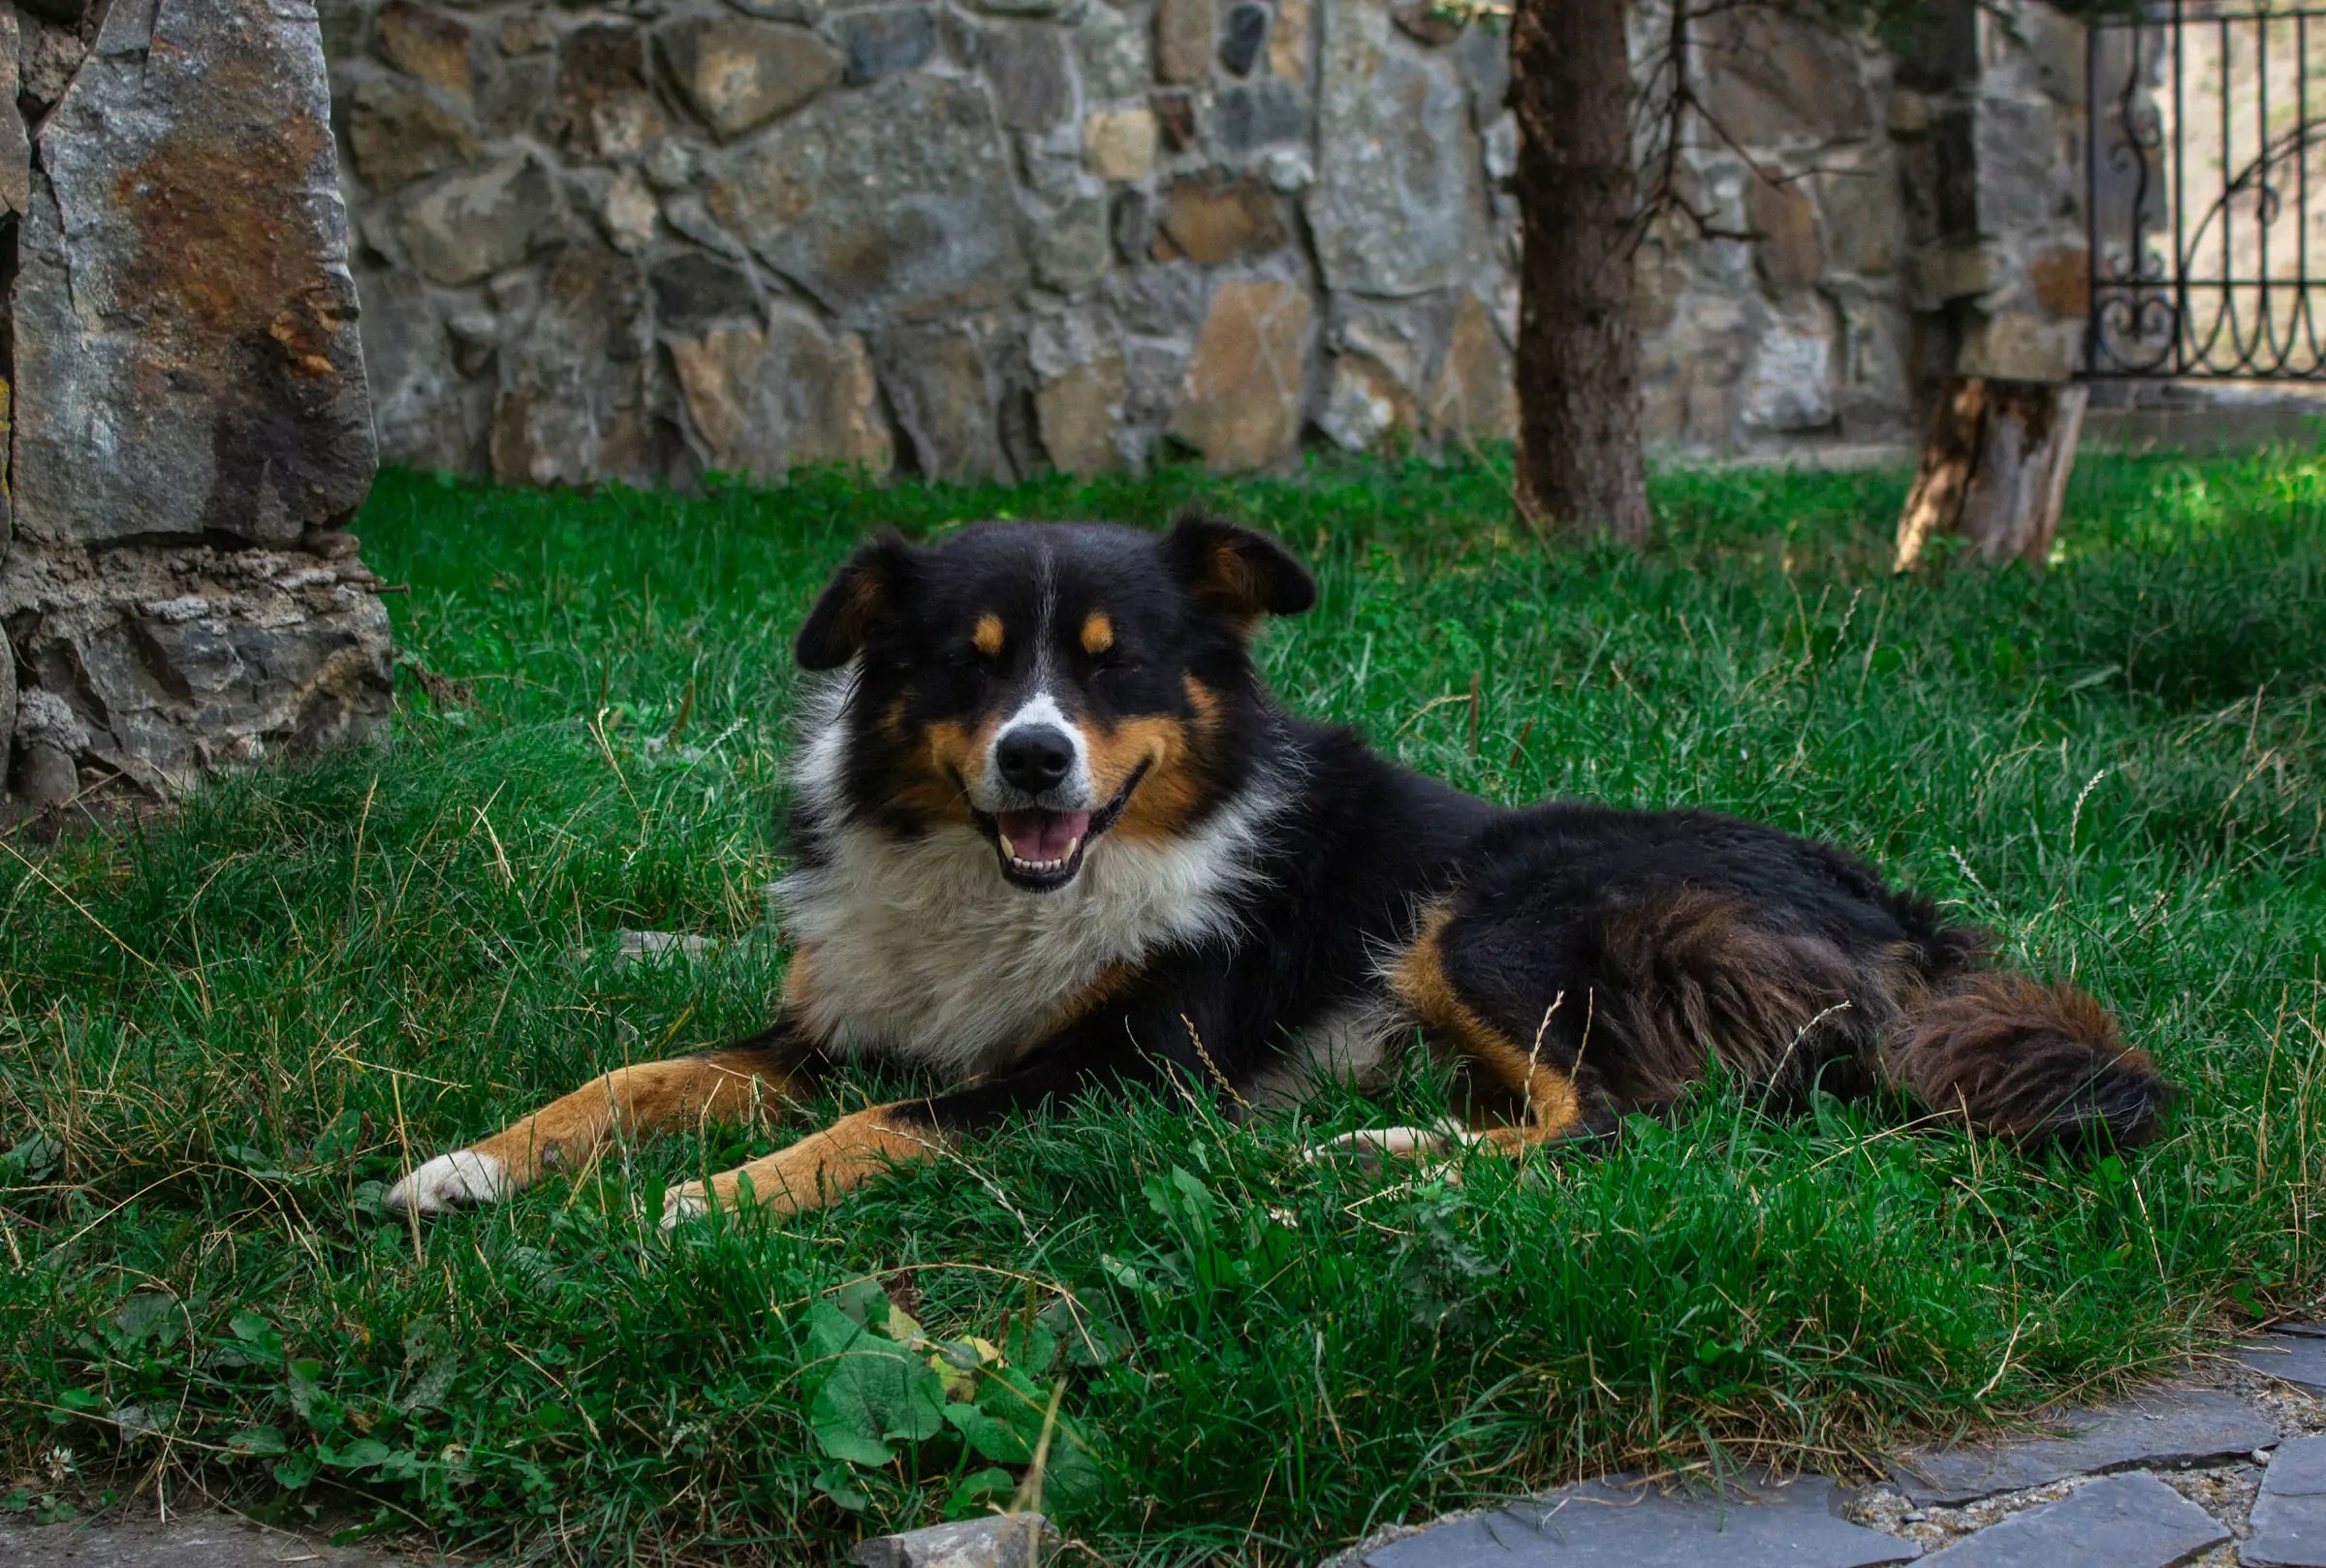 How Can I Make My Backyard Safe for My Dog